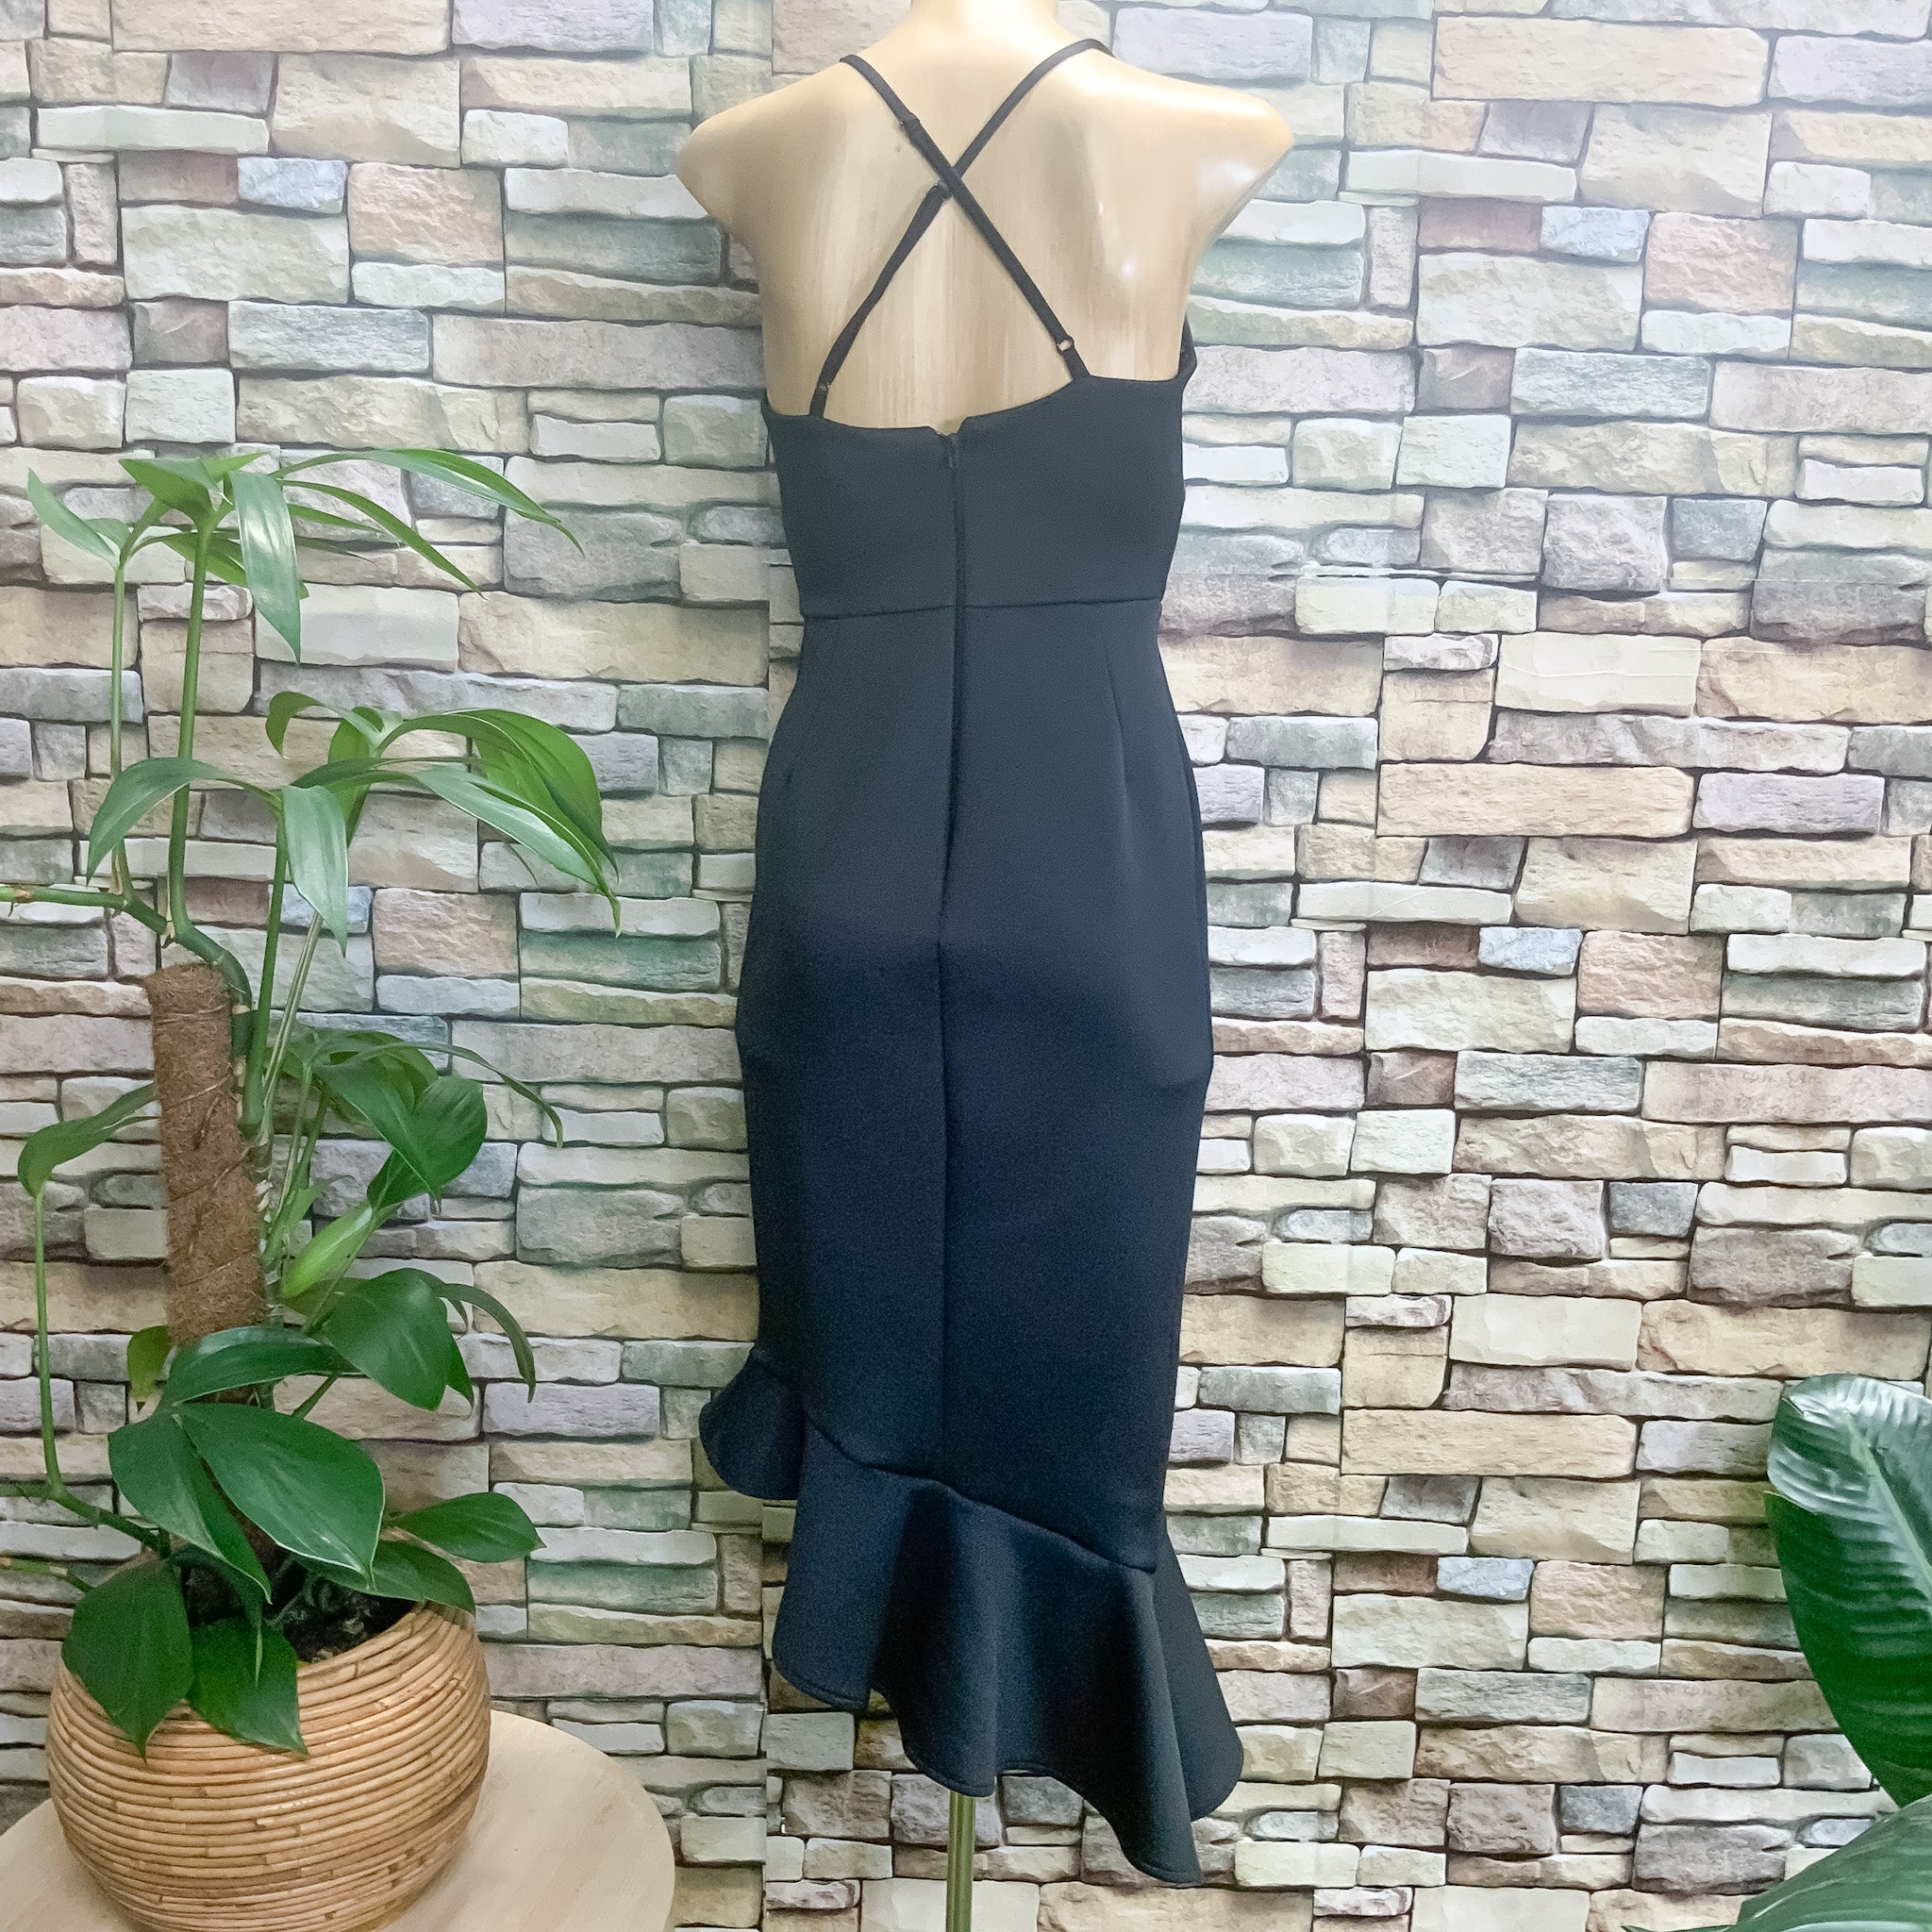 ASOS Mermaid Cut Sateen Black Asymmetrical Cocktail/Formal Dress - Size 10